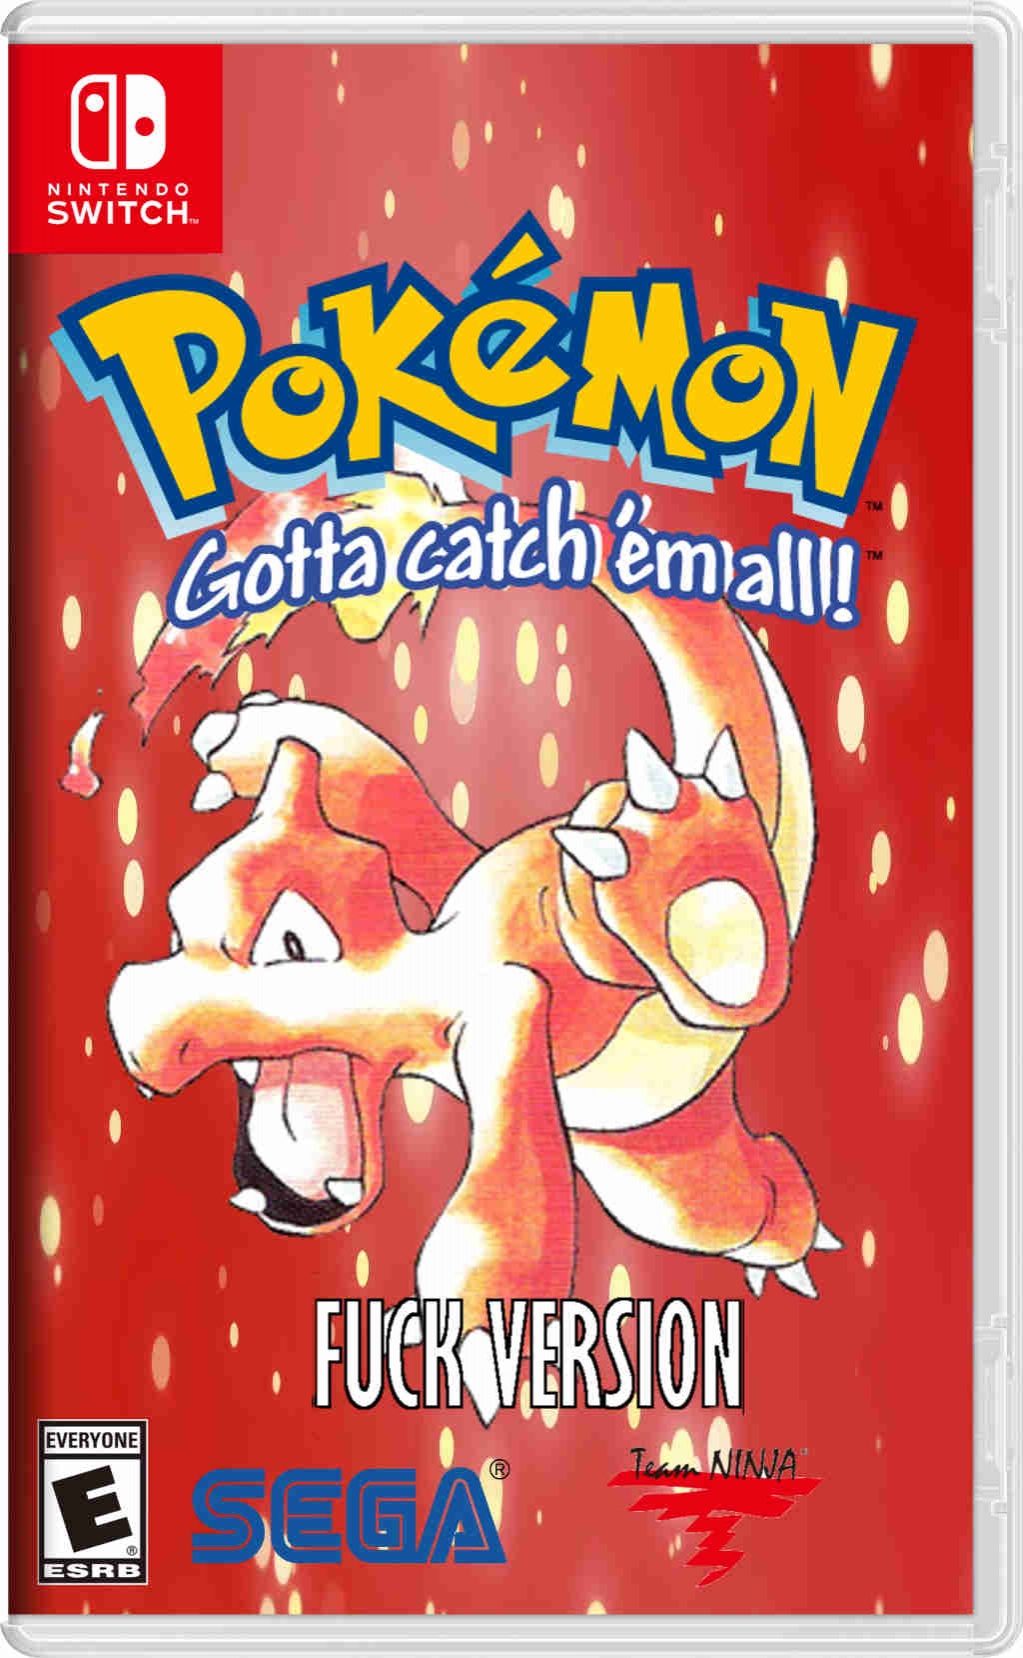 Pokémon Fuck Version box cover